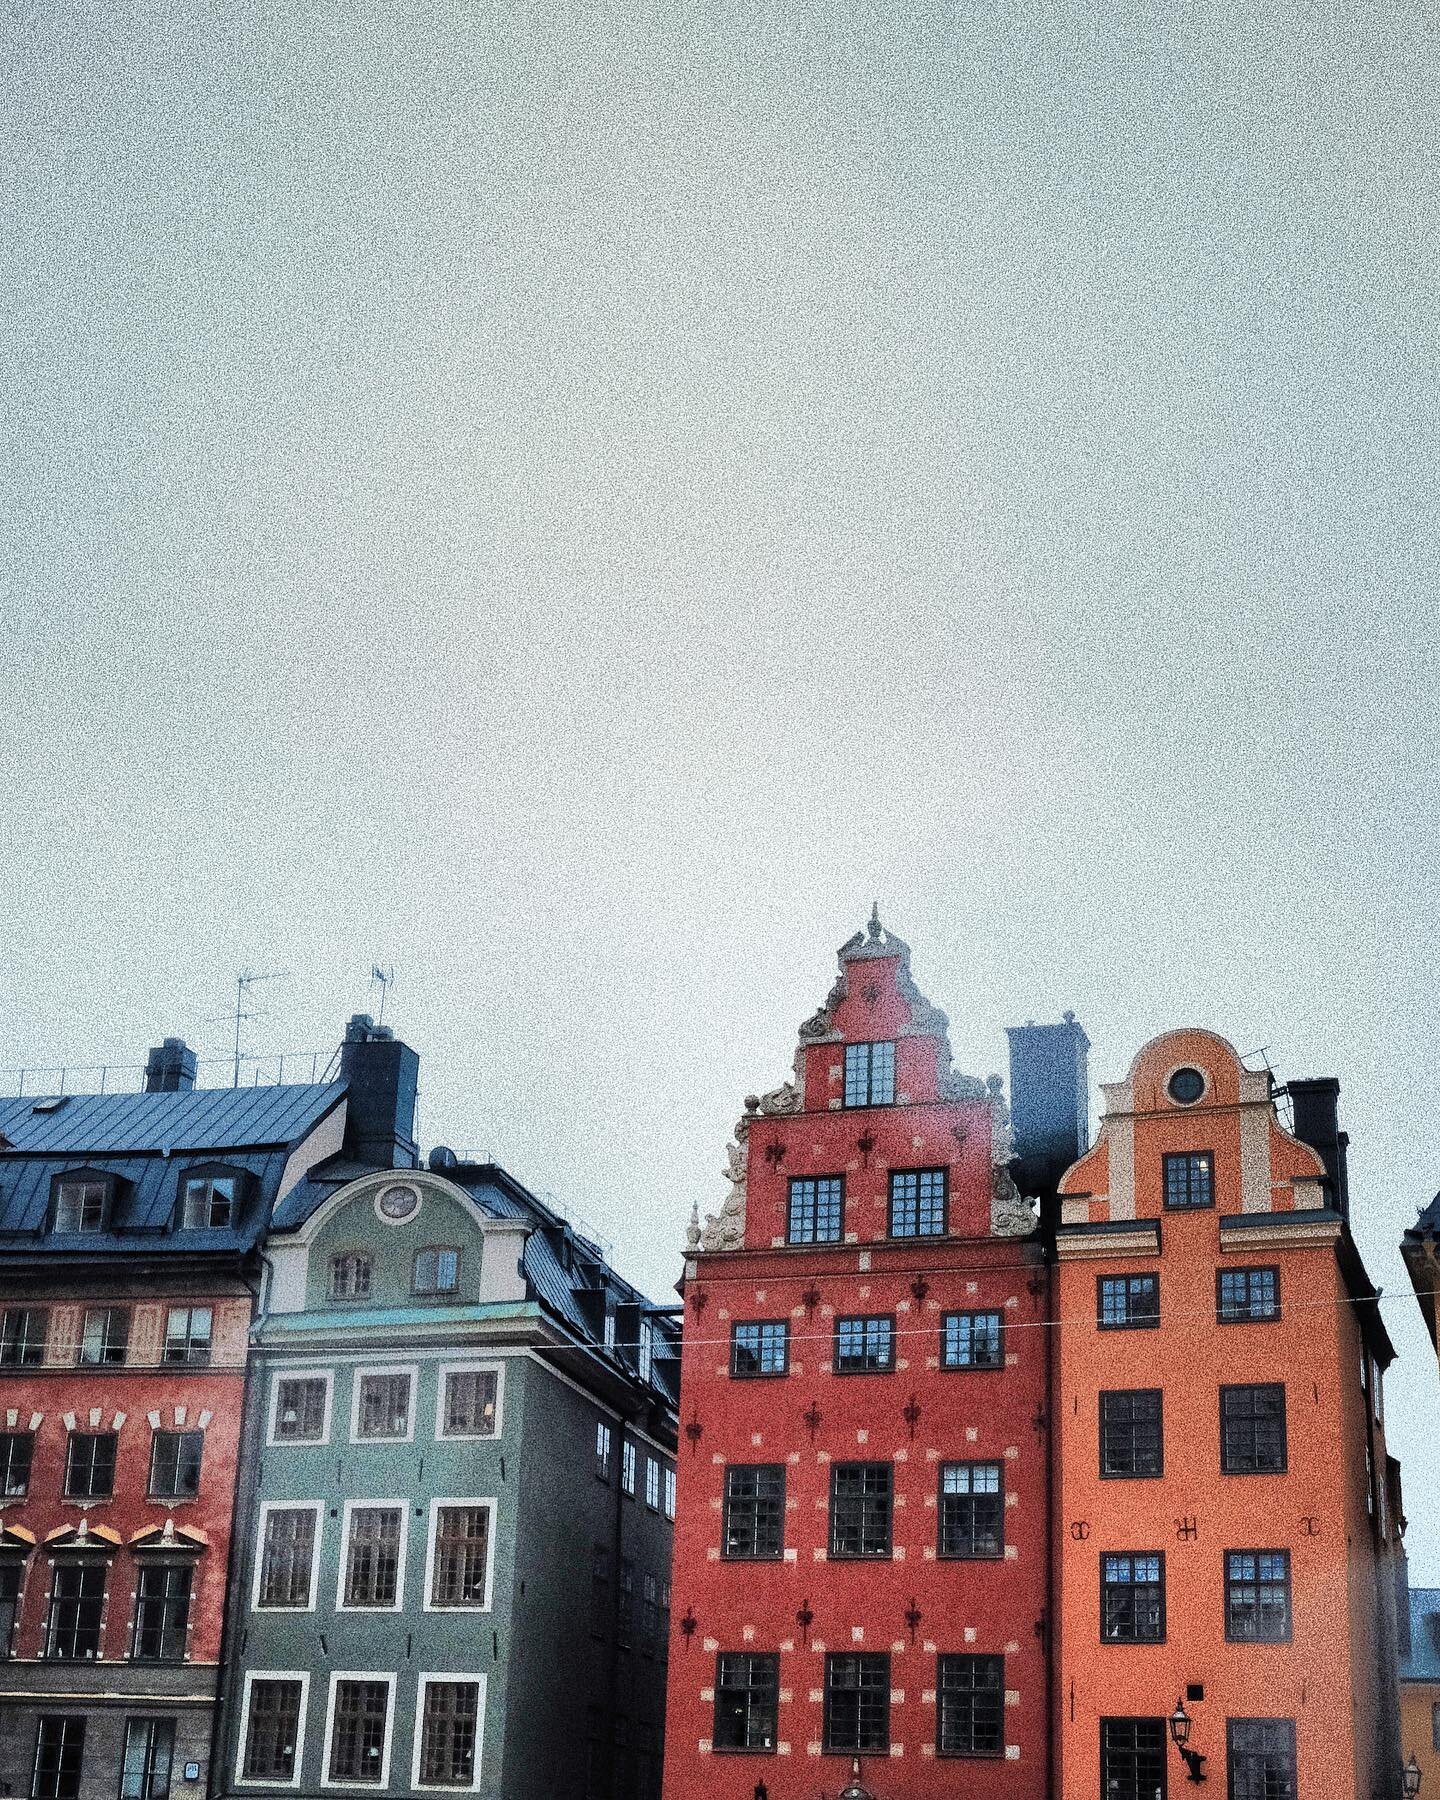 #gamlastan #stockholm 
.
#sweden #upnorth #archipelago #theoutbound #abba #traveltheworld #escapeplan #homeawayfromhome